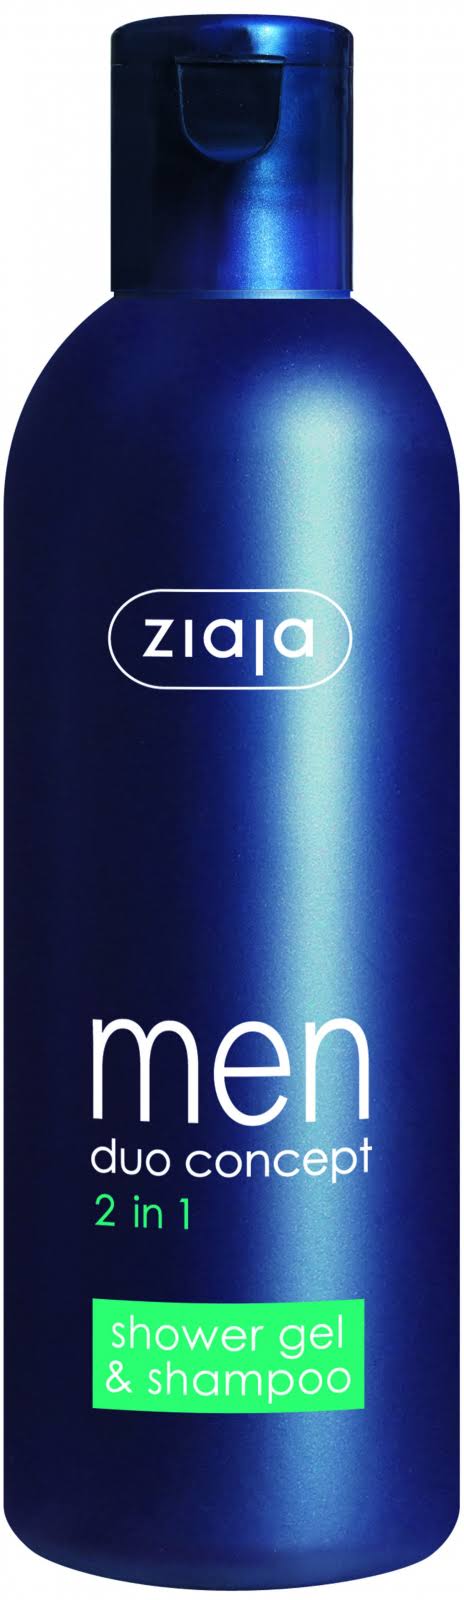 Ziaja Men Shower Gel and Shampoo 2 in 1 300ml